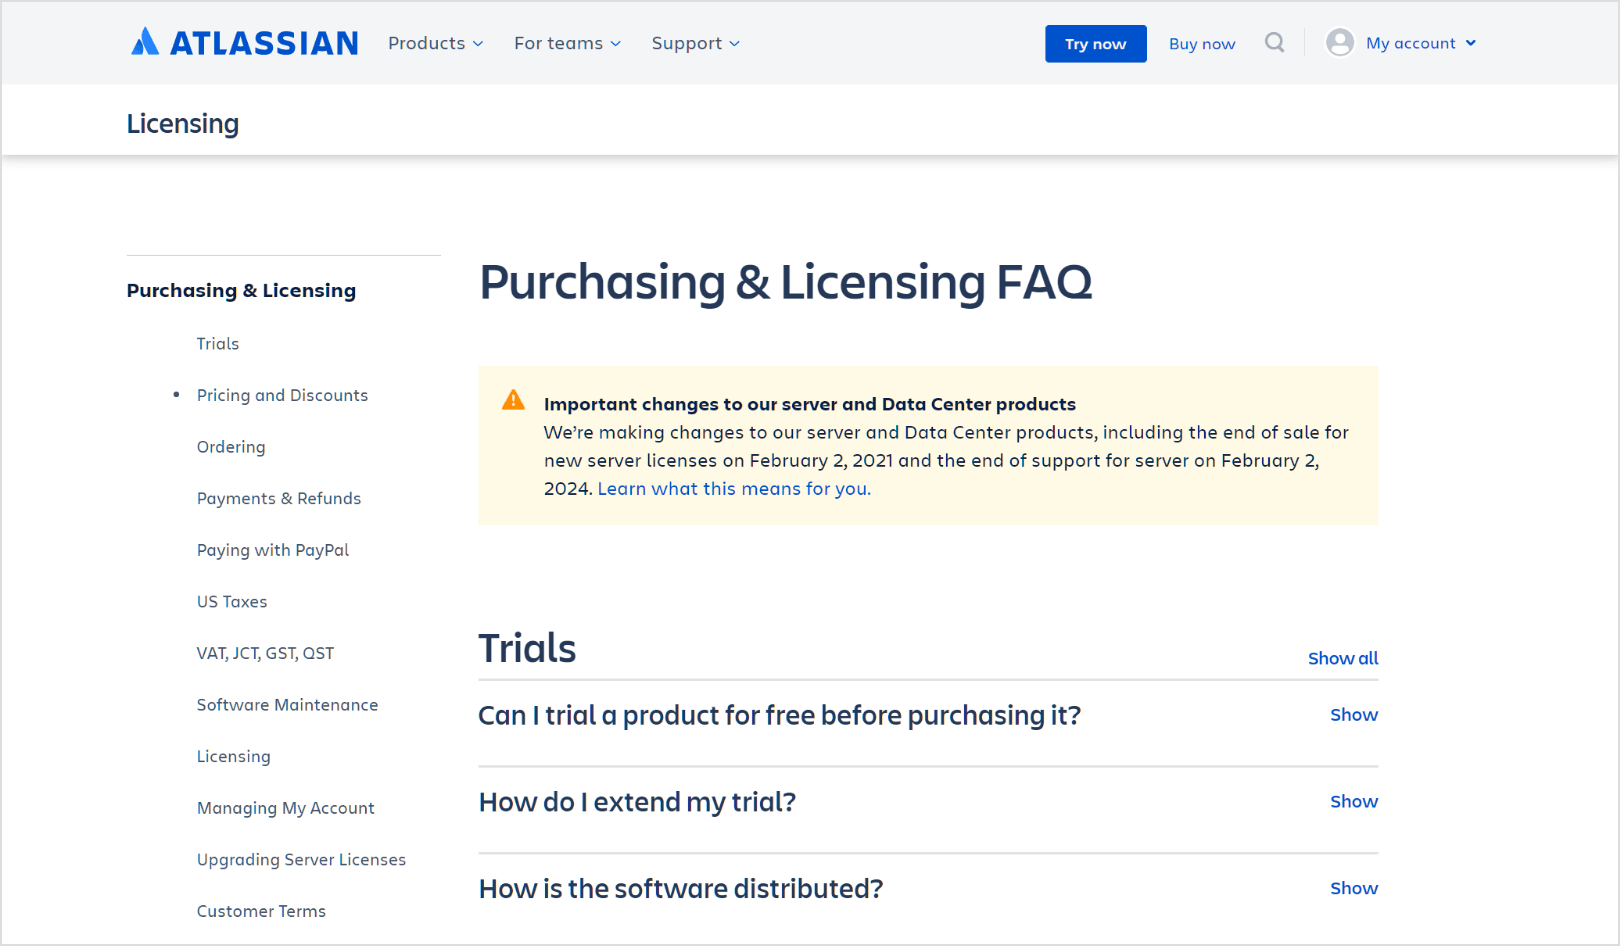 Atlassian’s FAQ page